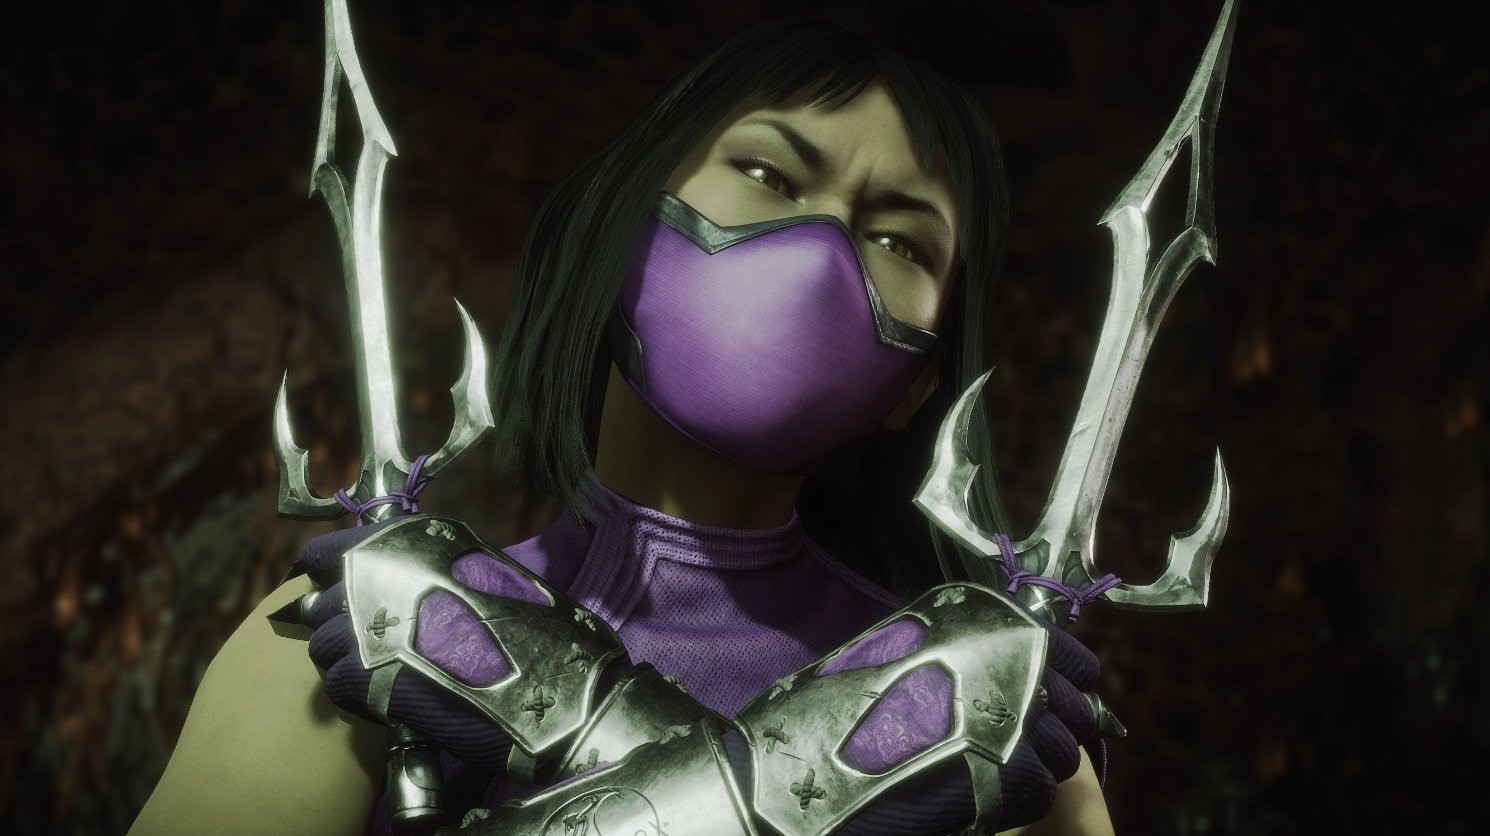 Mortal Kombat 11 On Nintendo Switch And PC Won't Get Cross-Play